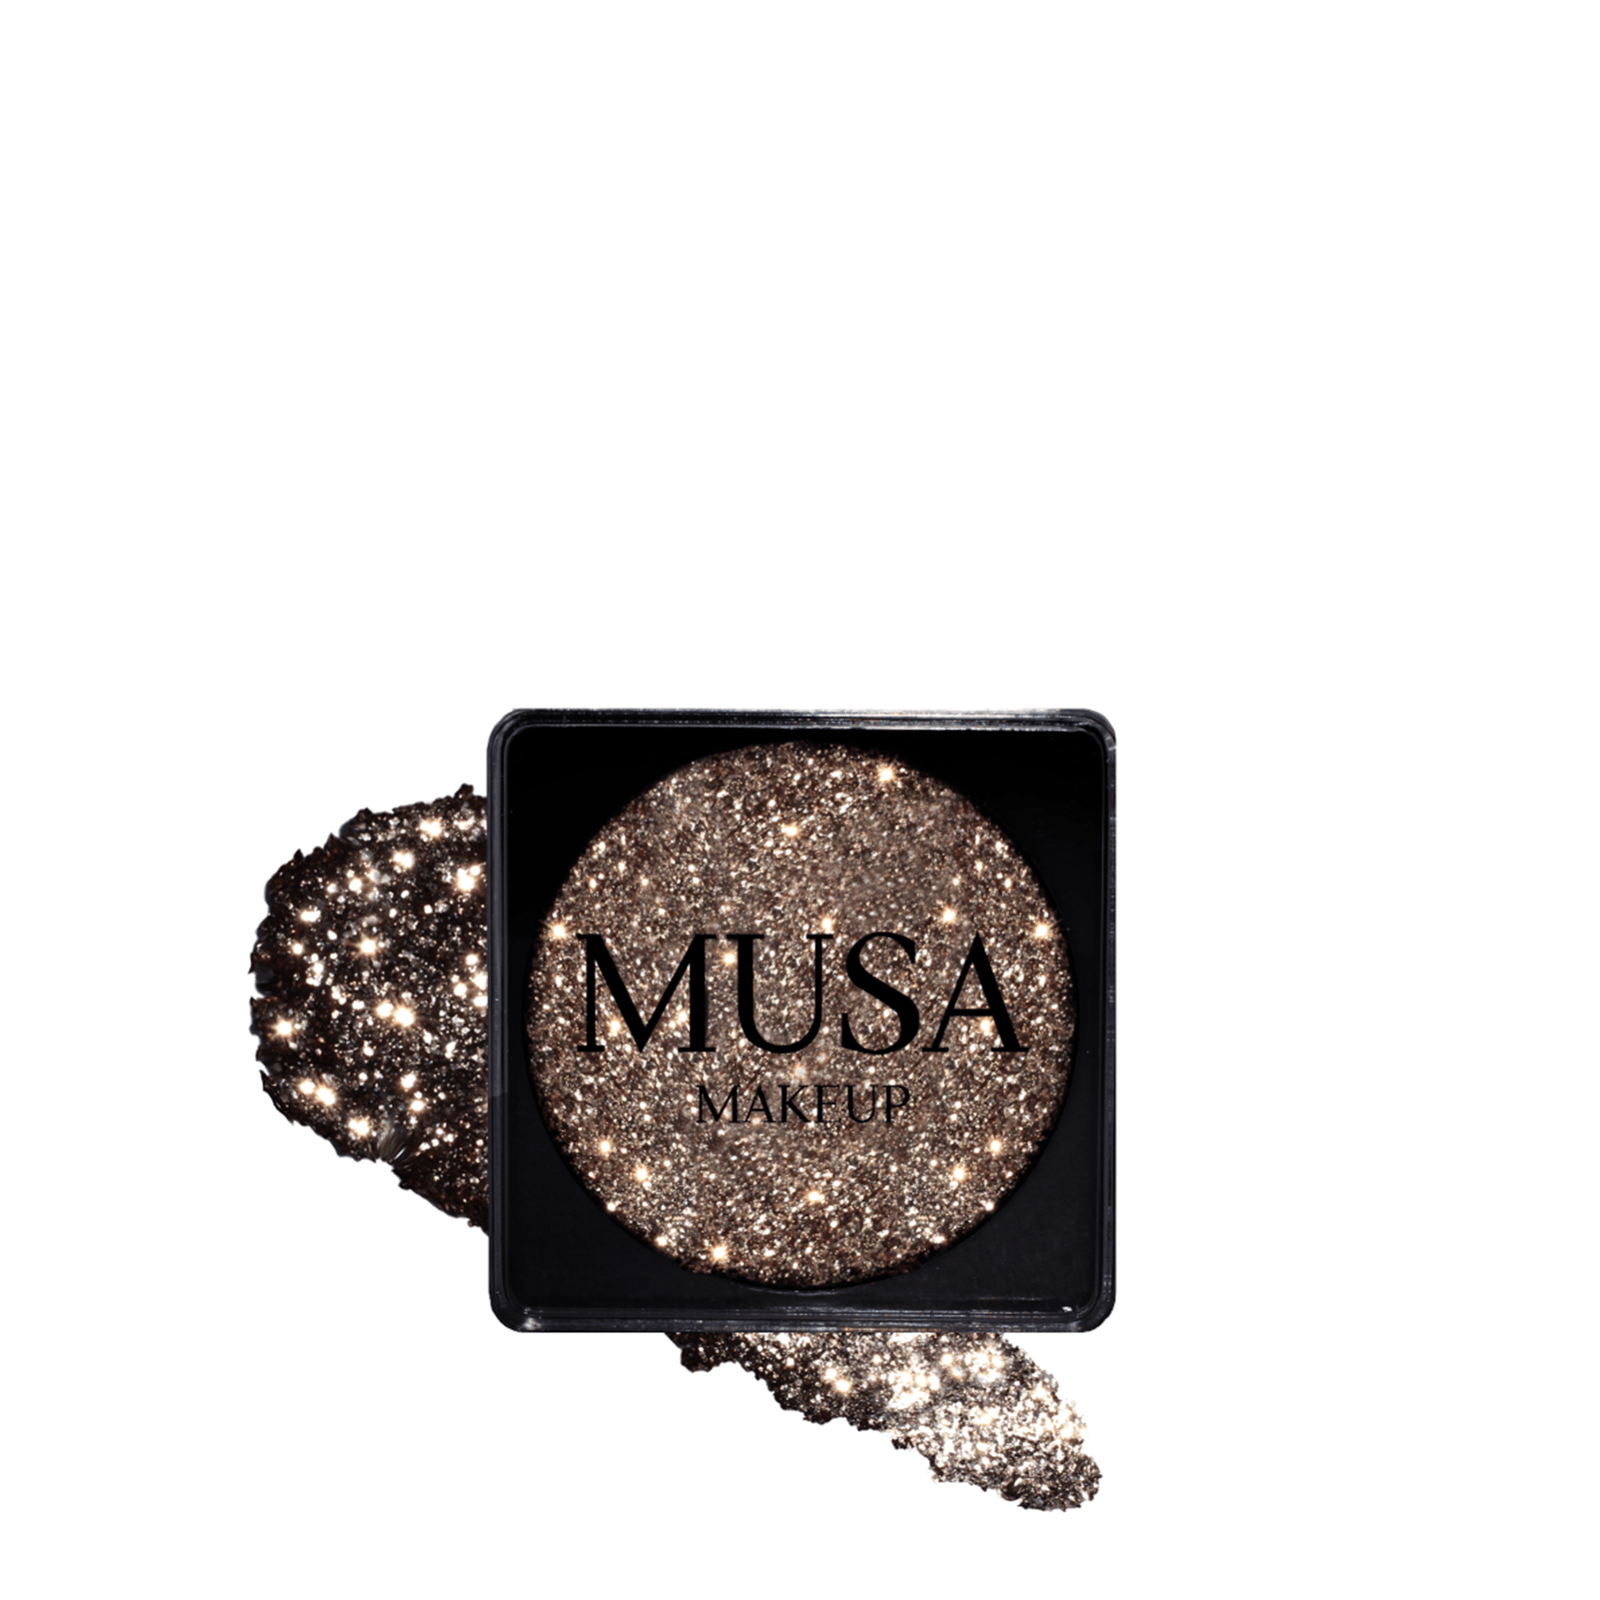 MUSA Makeup Creamy Glitter Atena 4g (0.14 oz)